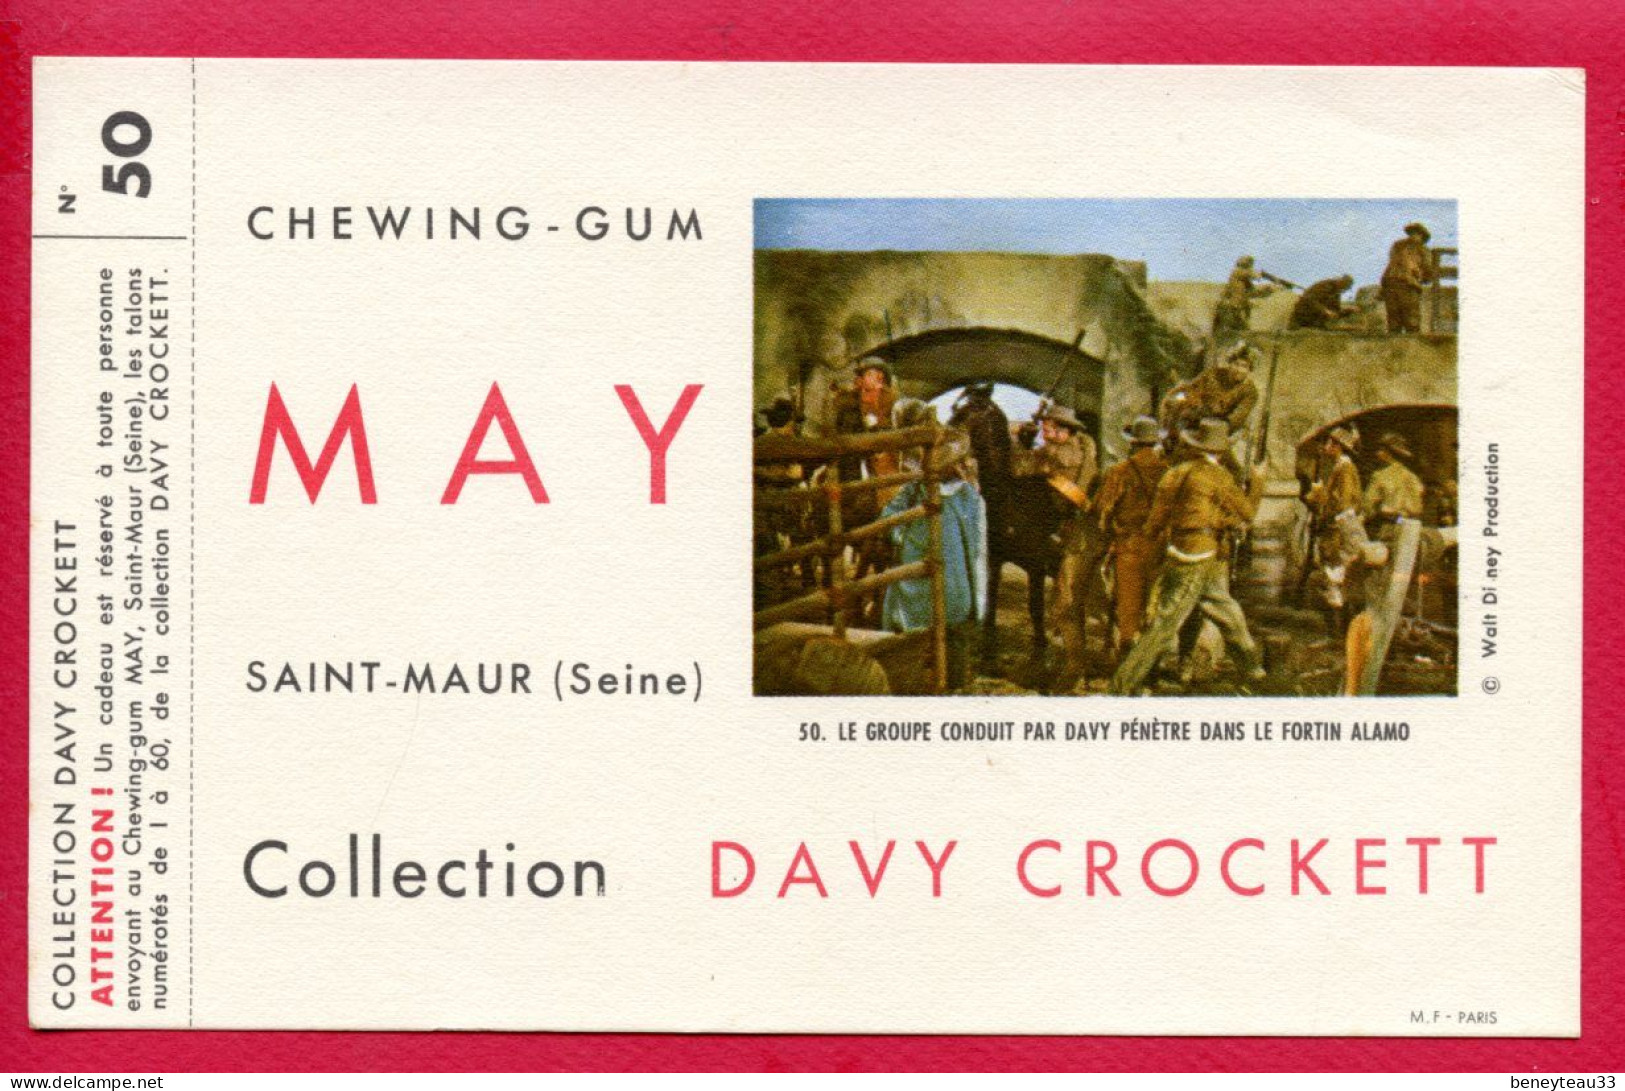 BUVARDS (Réf : BUV 026) CHEWING-GOM MAY St-MAUR (seine) Collectio DAVY CROCKETT - Koek & Snoep